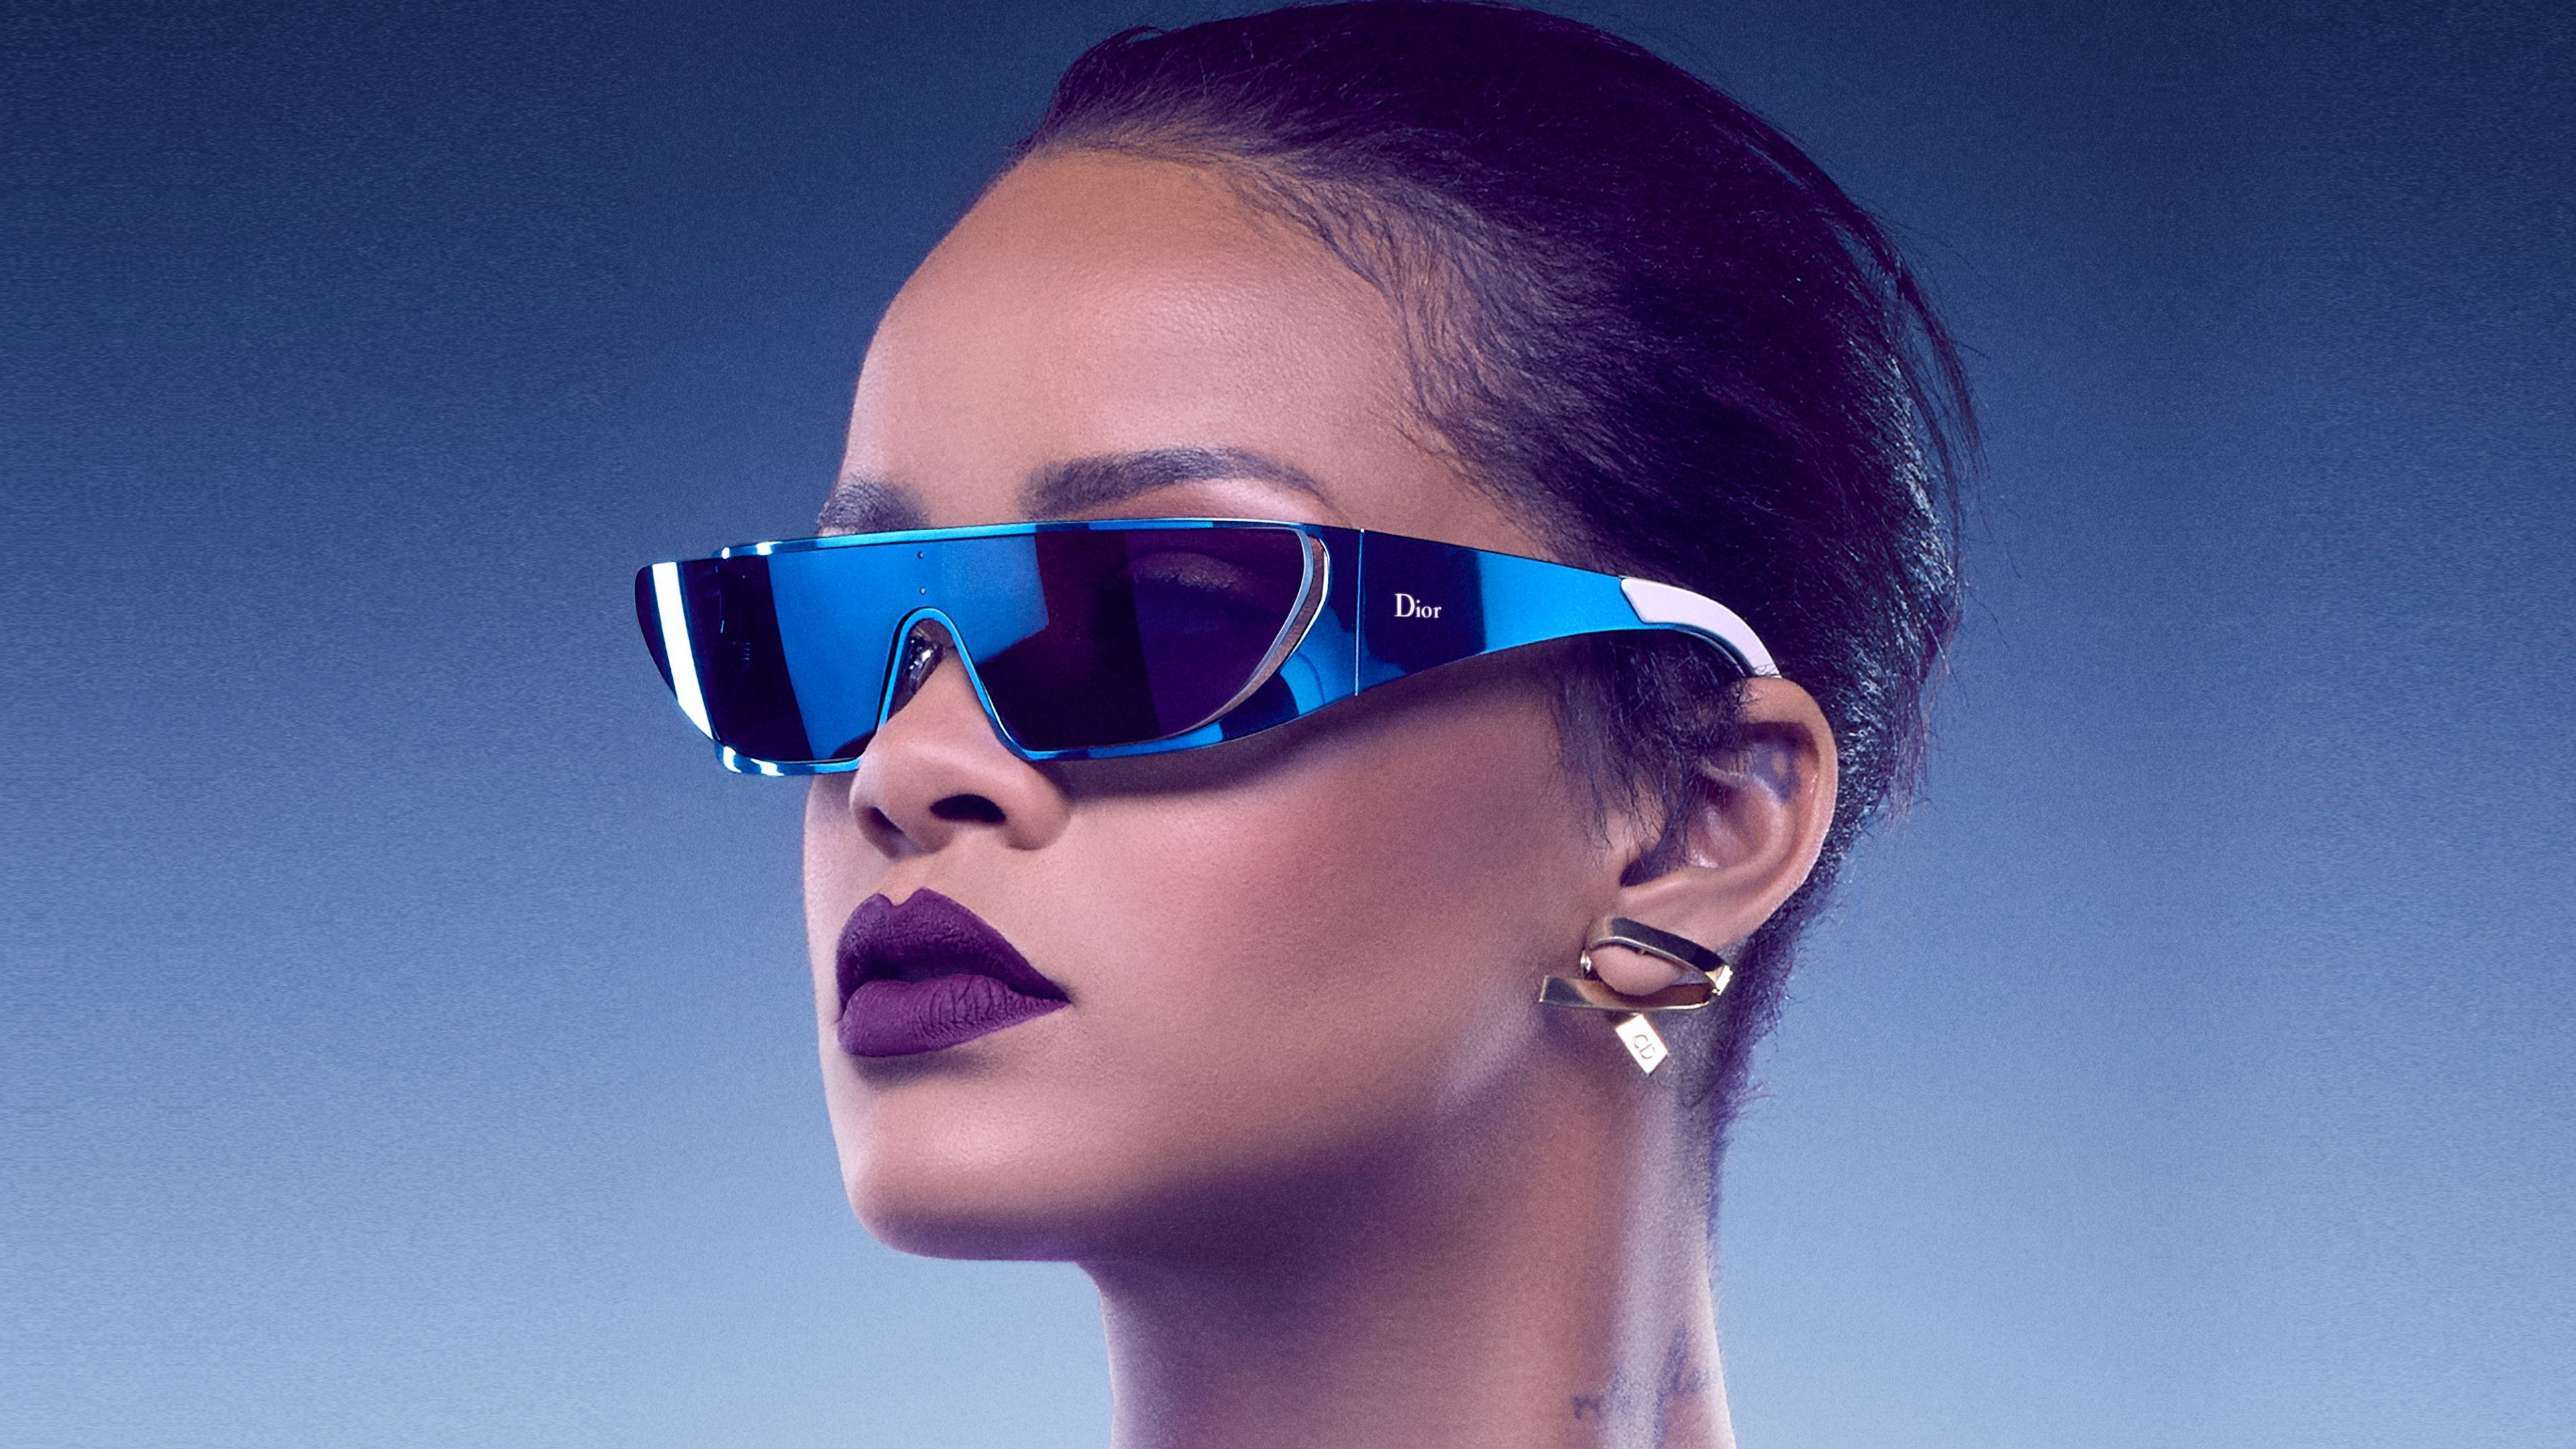 A woman wearing sunglasses and lipstick - Rihanna, Dior